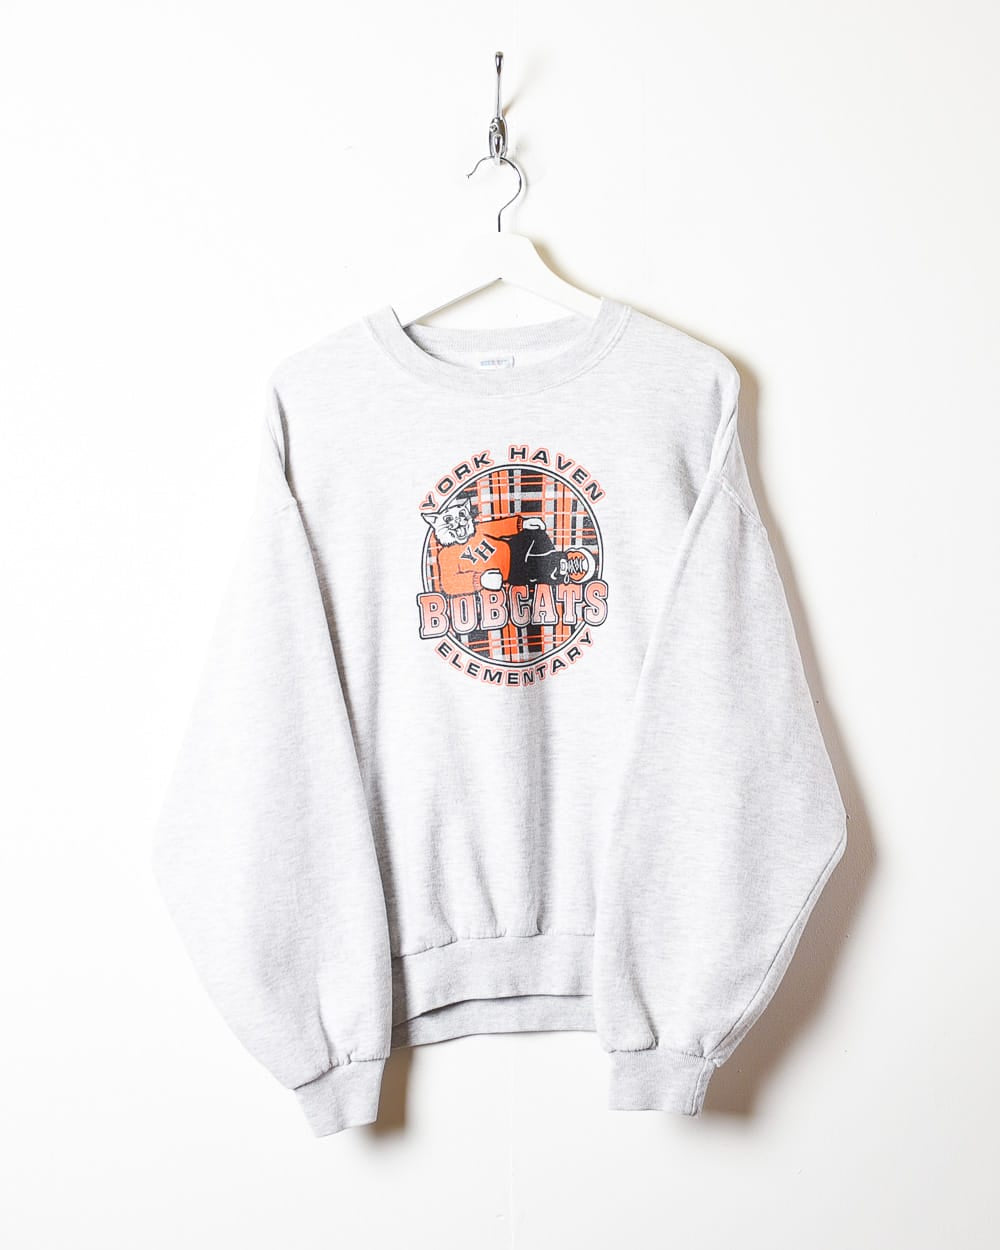 Stone York Haven Elementary Bobcats Sweatshirt - Small